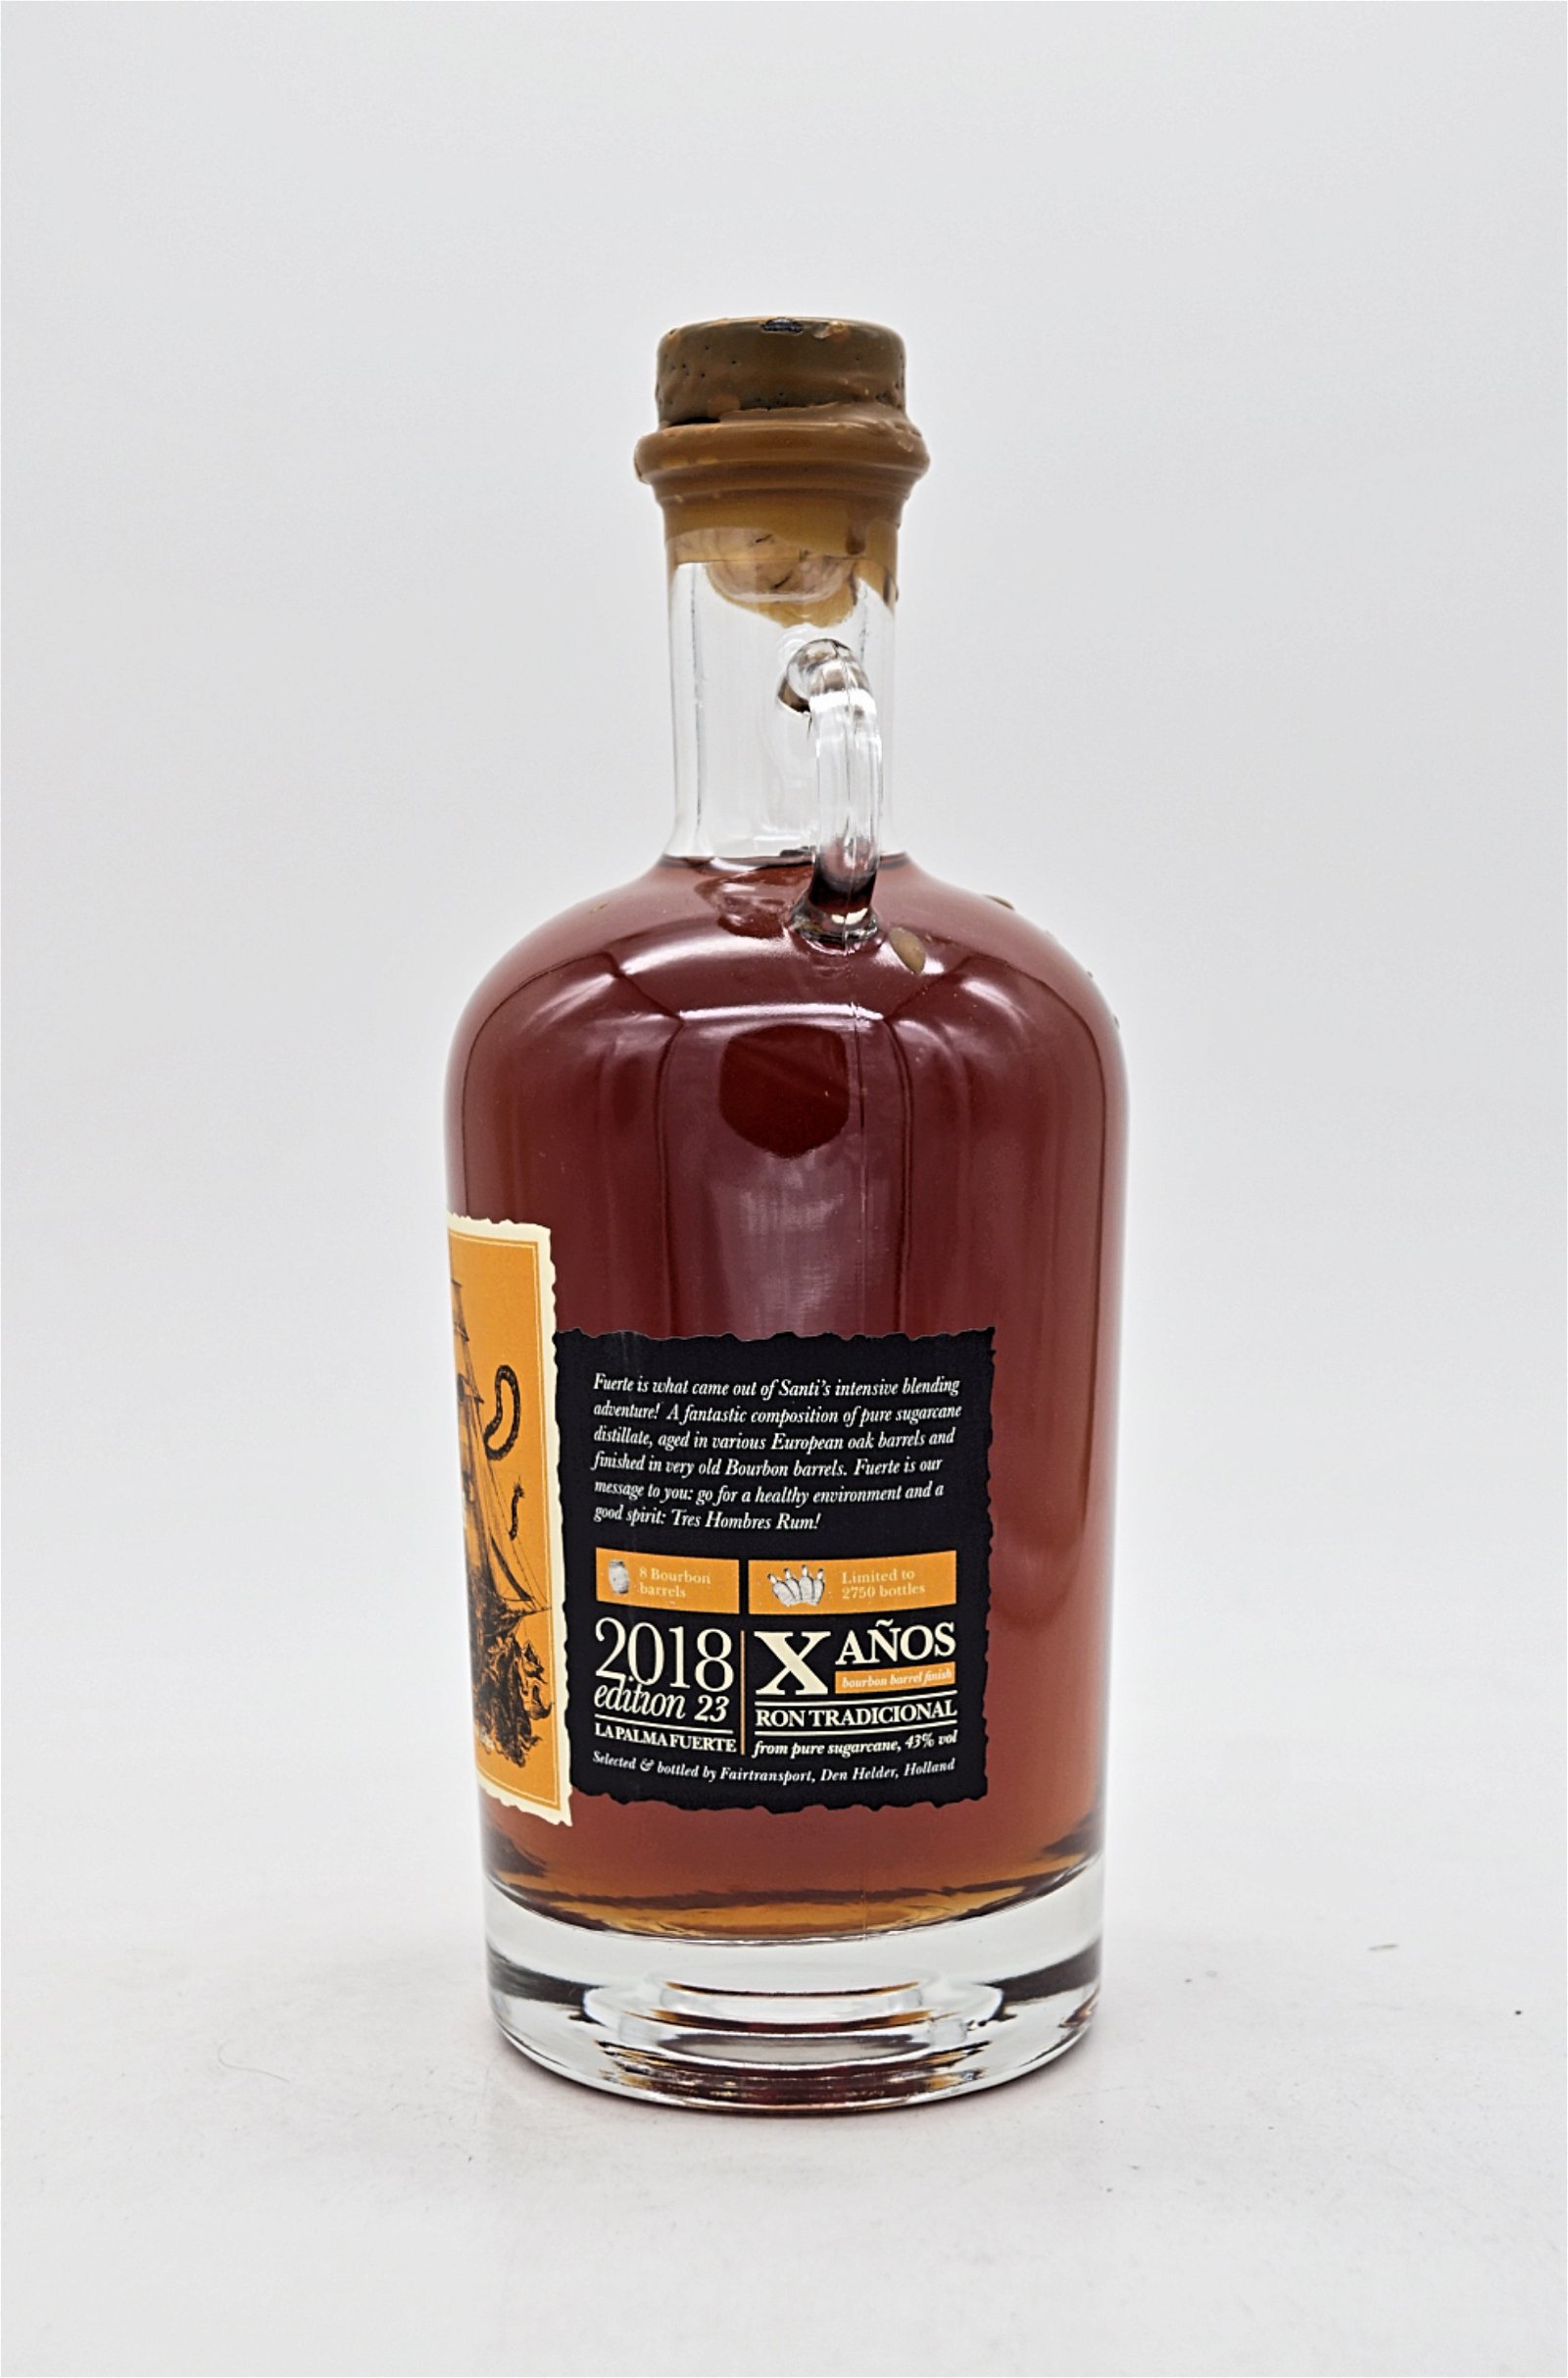 Tres Hombres X Jahre 2018 Edition 23 La Palma Fuerte Bourbon Barrel Finish Rum